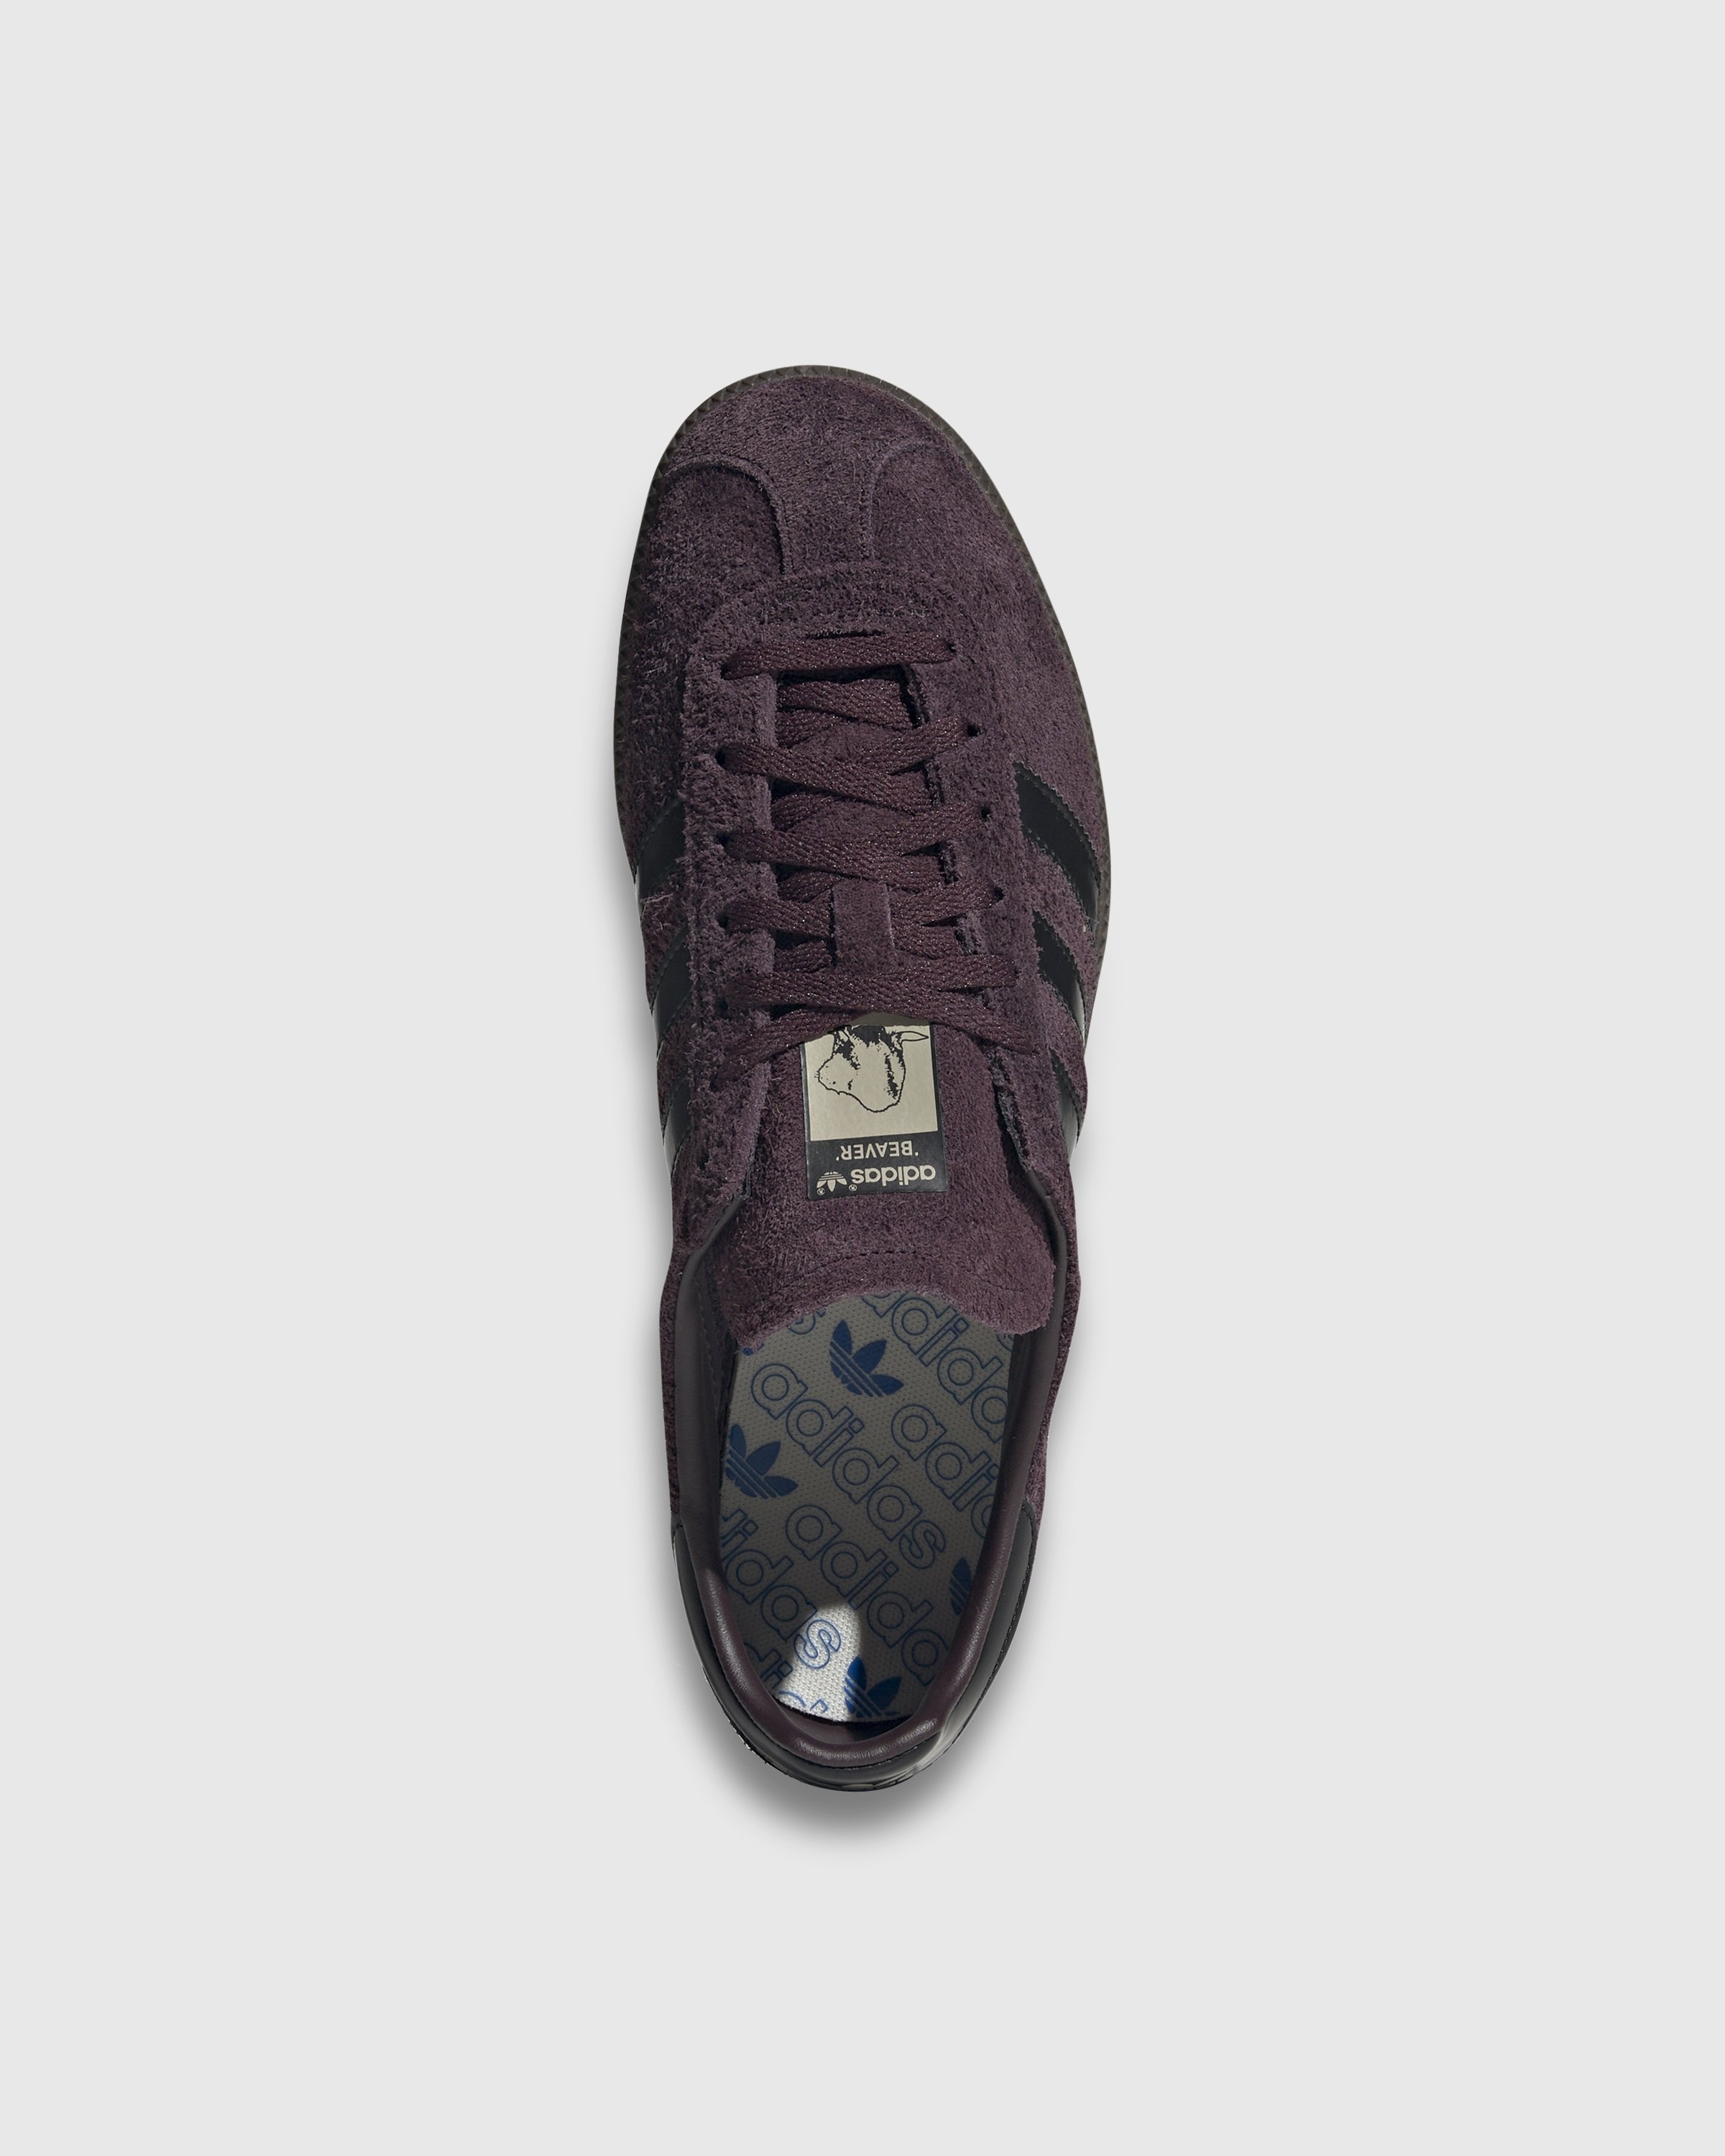 Adidas – State Brown - Sneakers - Brown - Image 5